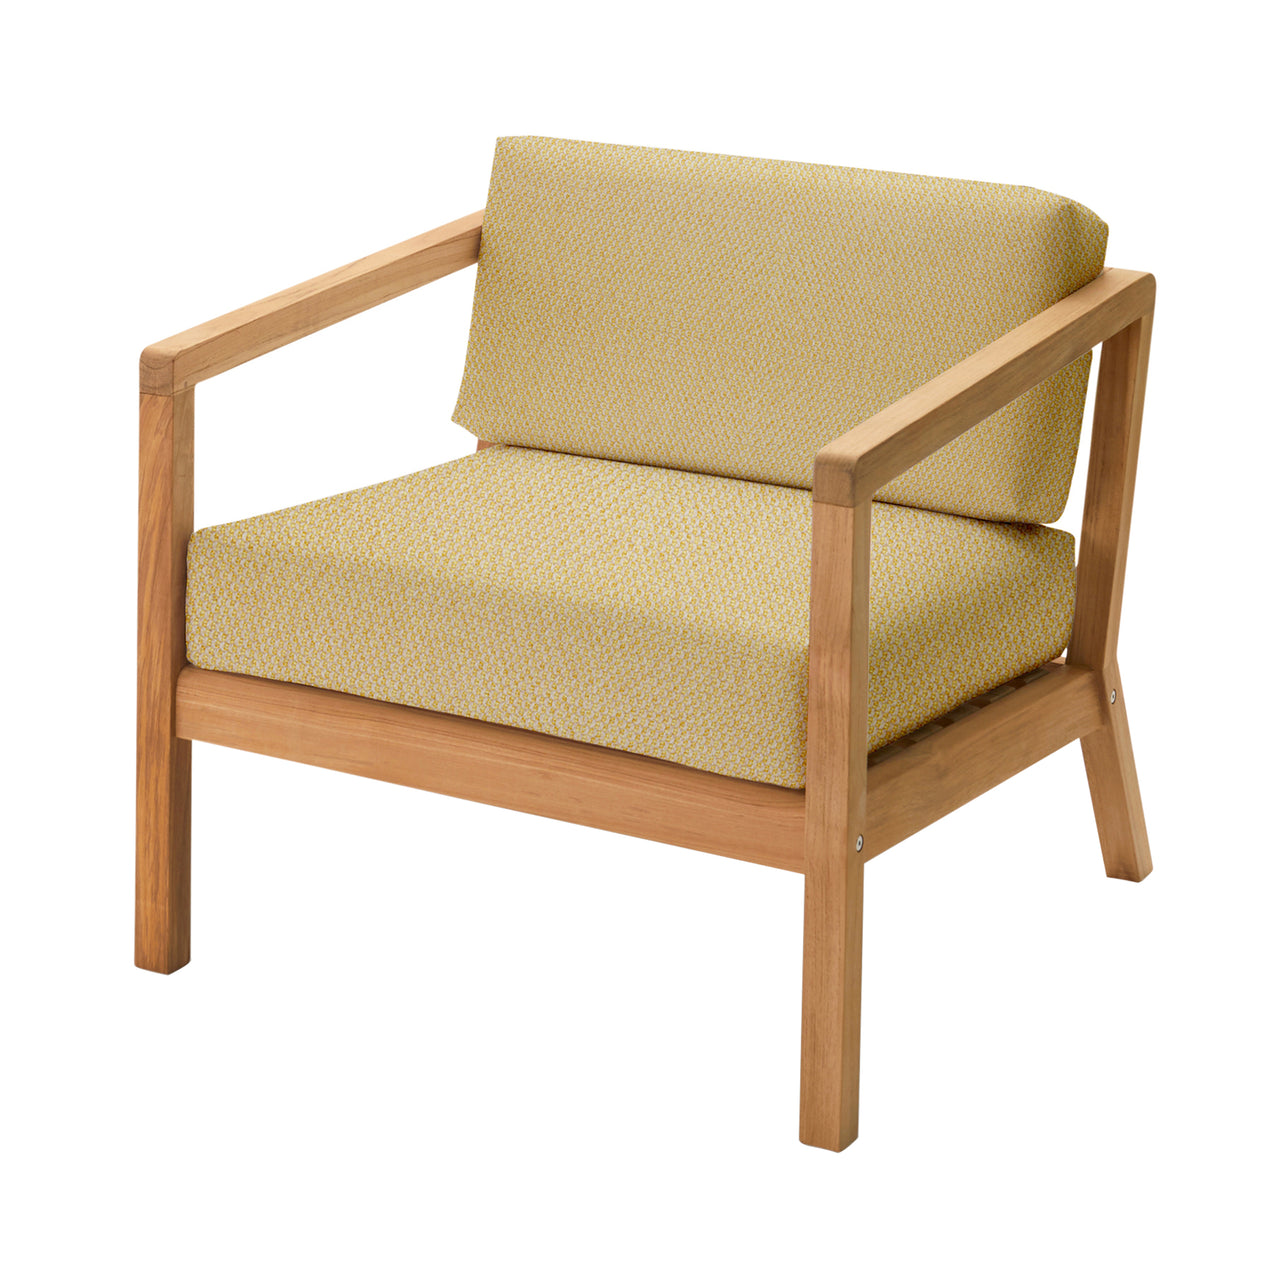 Virkelyst Chair: Honey Yellow